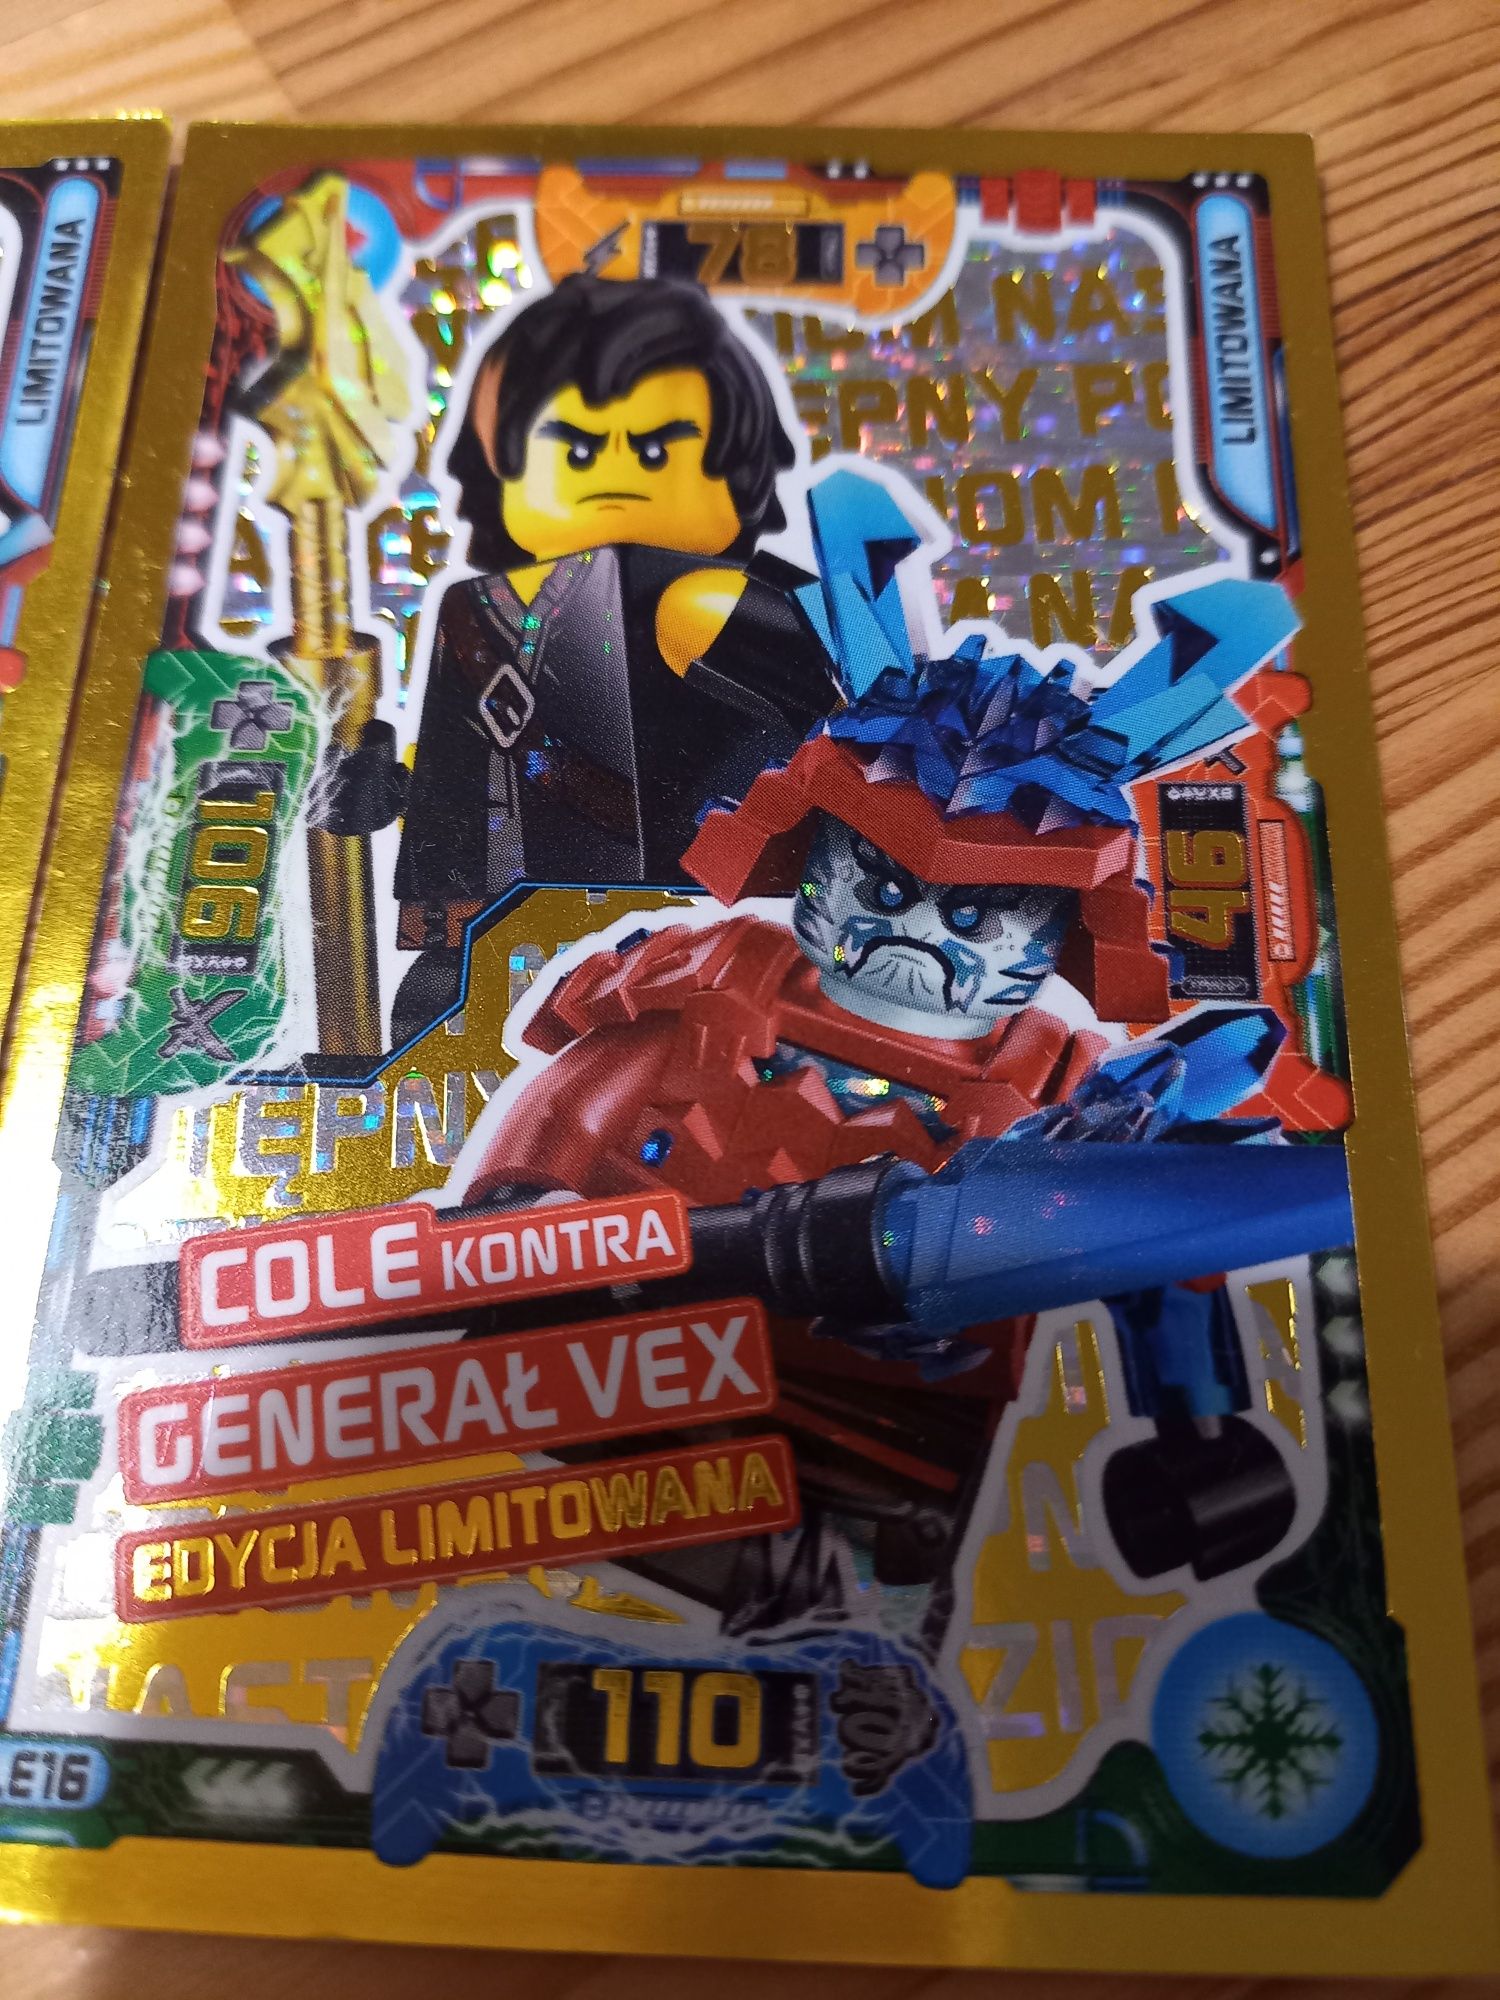 Kart Lego Ninjago 2 szt